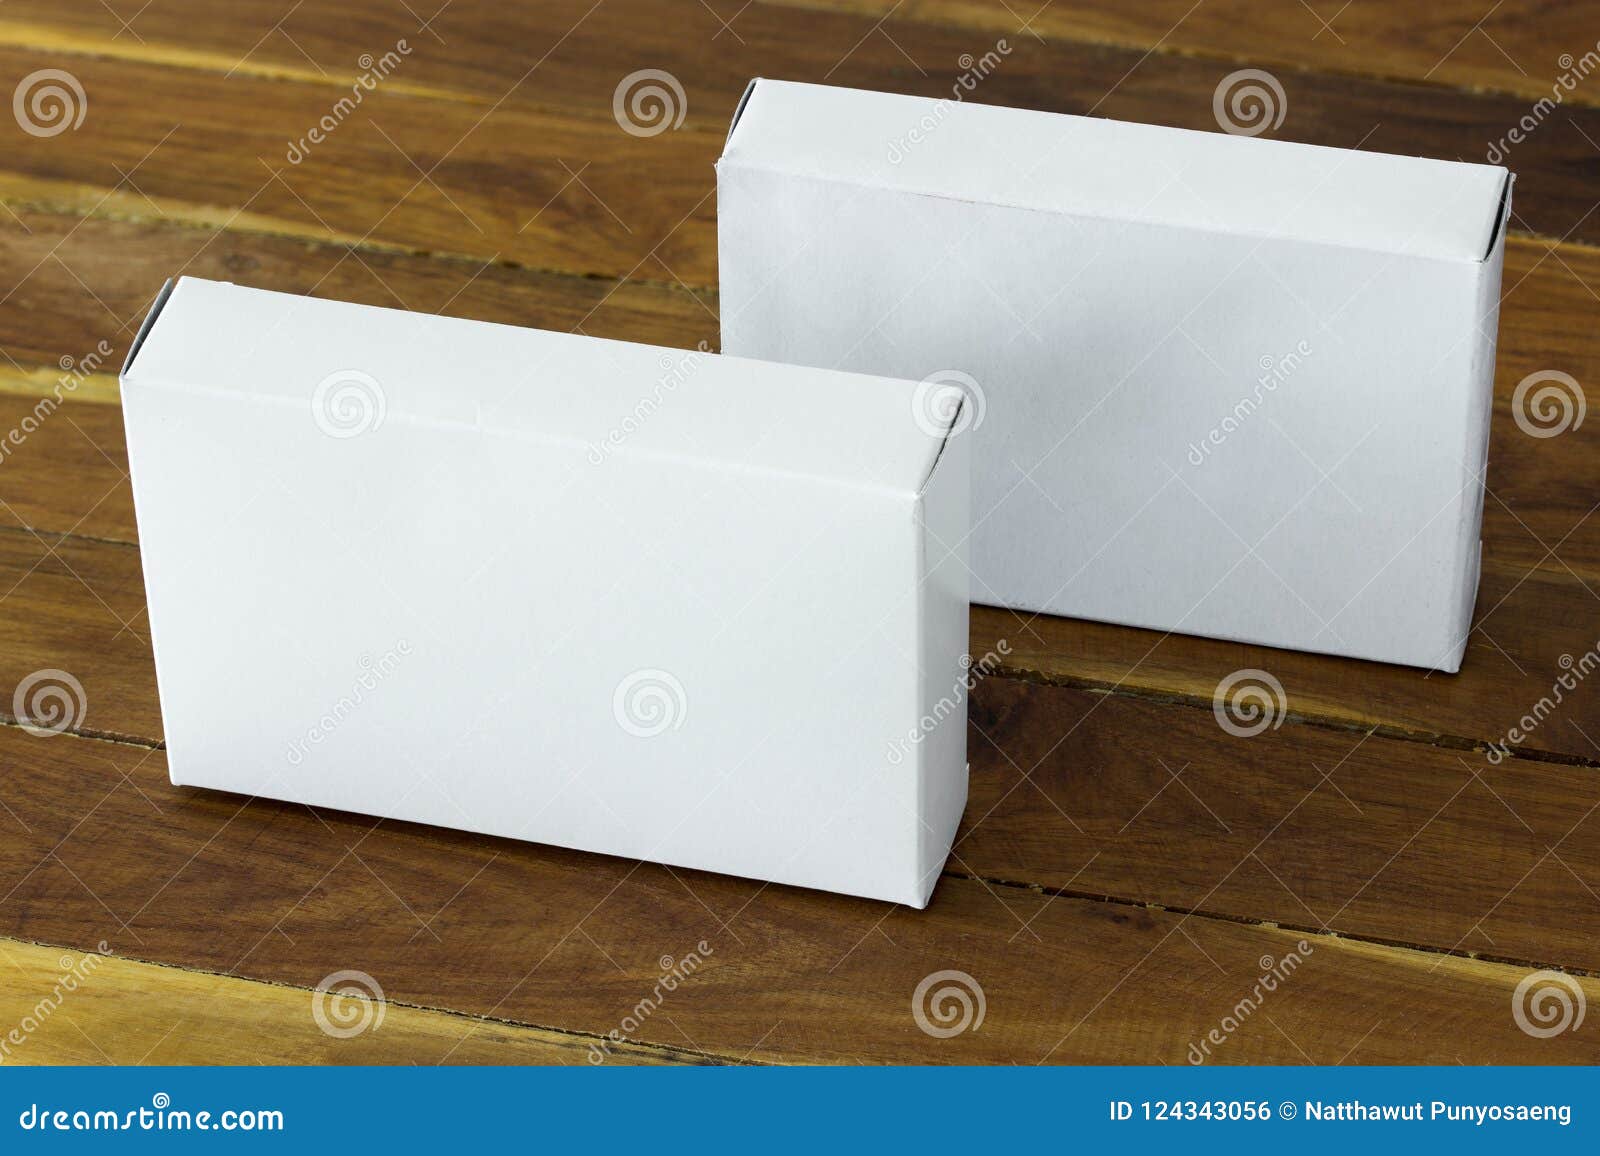 Download Blank White Cardboard Package Box Mockup Stock Photo ...